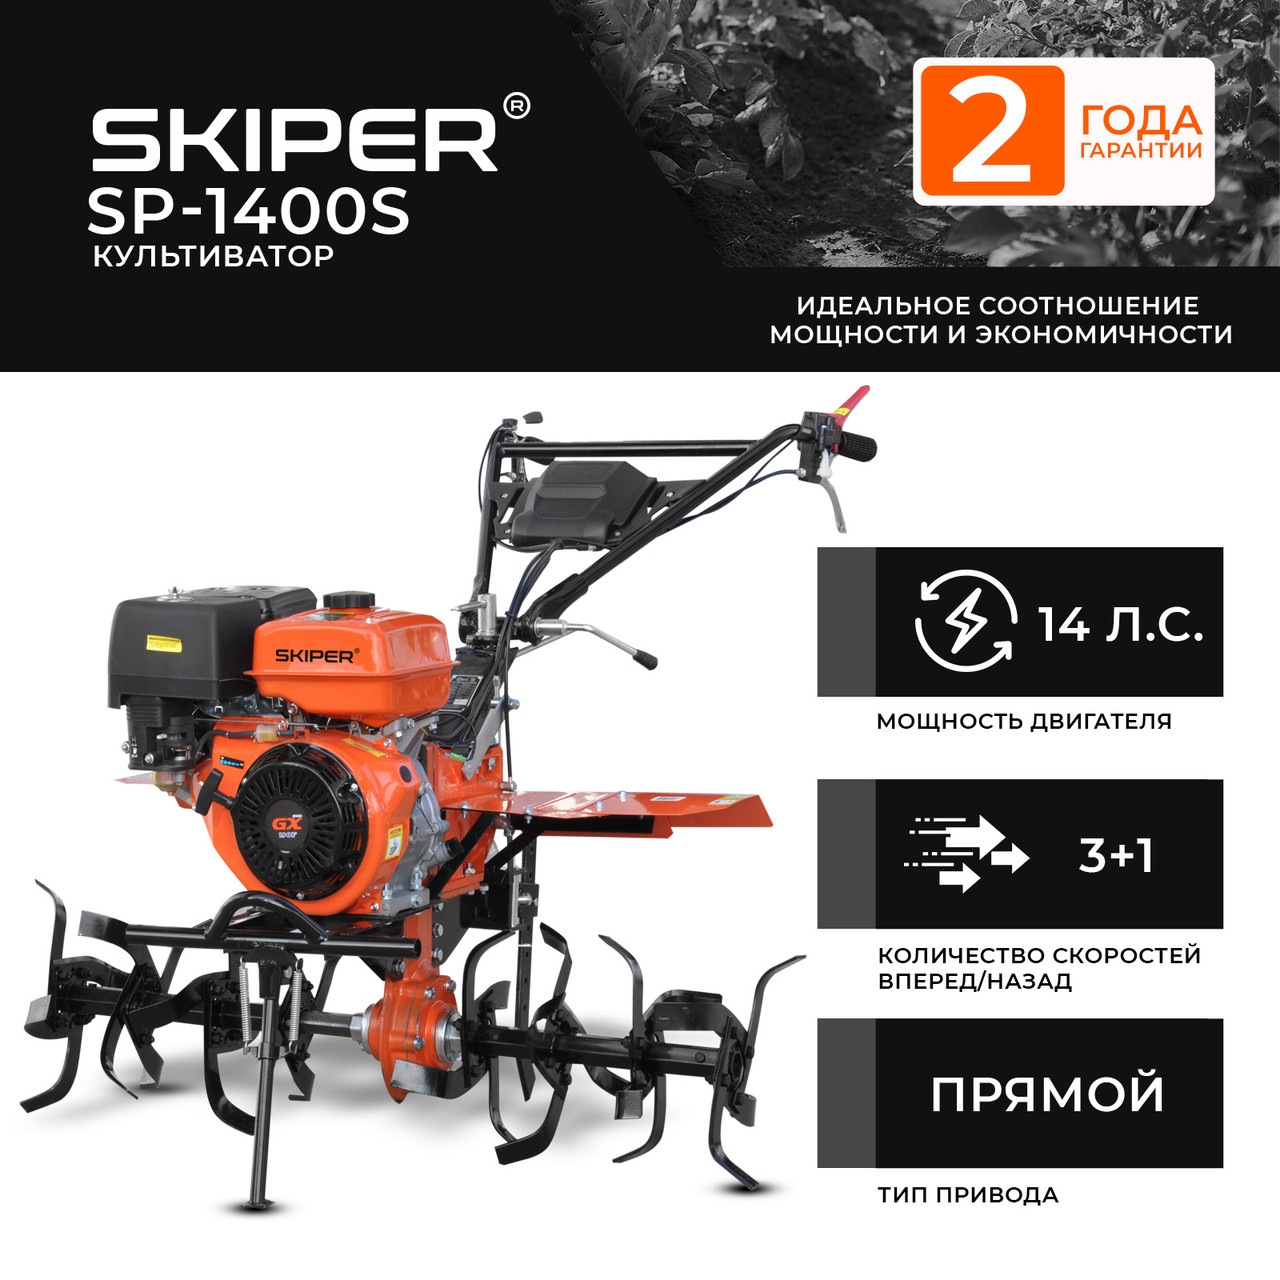 Культиватор SKIPER SP-1400S (14 л.с., без BОМ, пон.передача, 3+1, 2 года гарантии, без колёс, руч.)